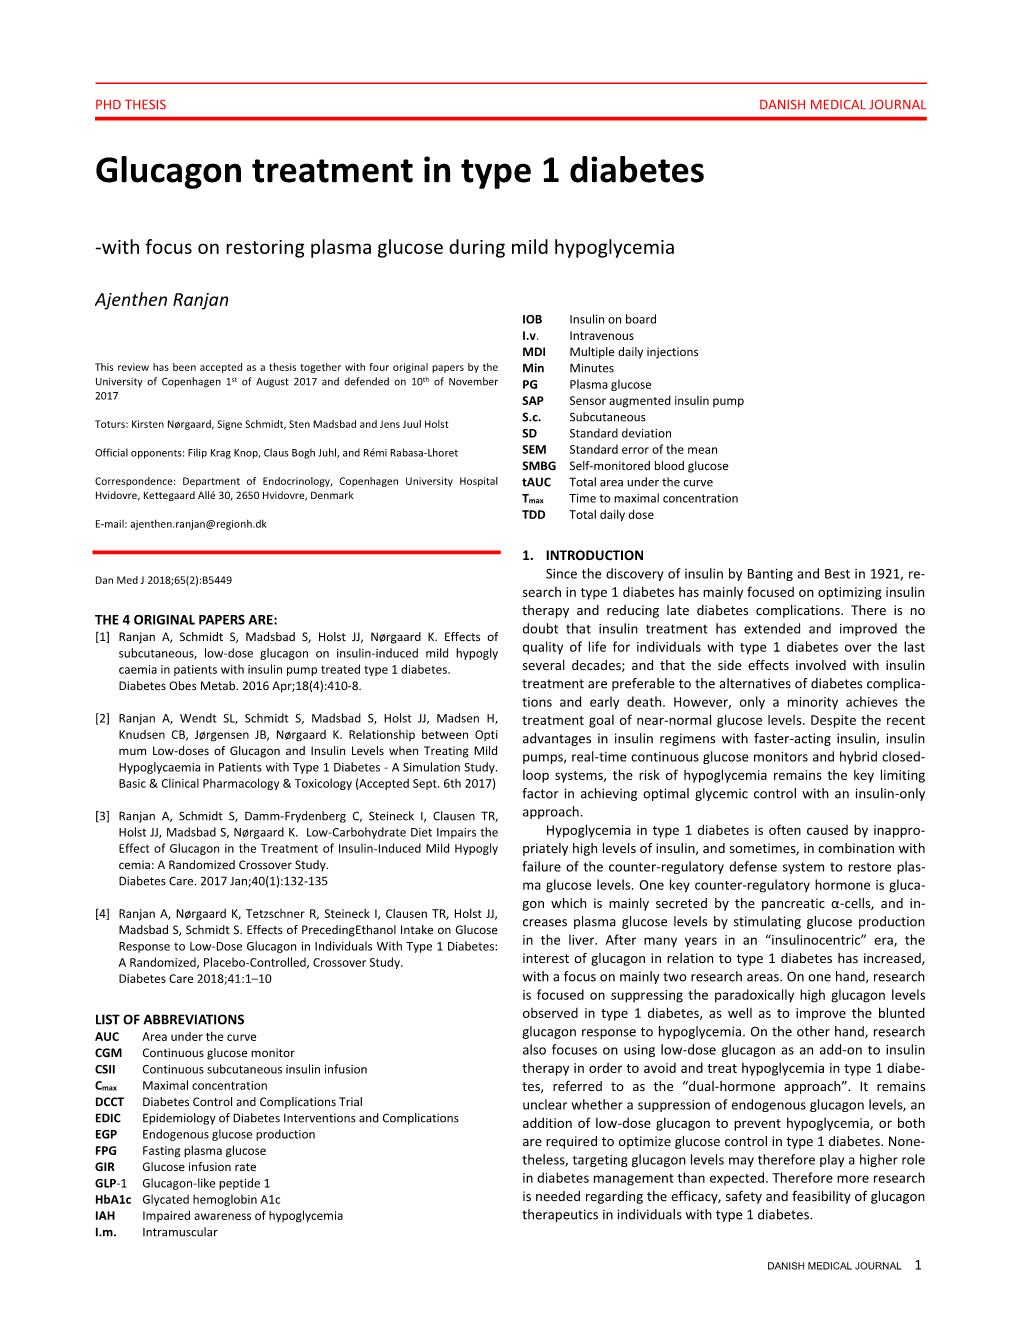 Glucagon Treatment in Type 1 Diabetes